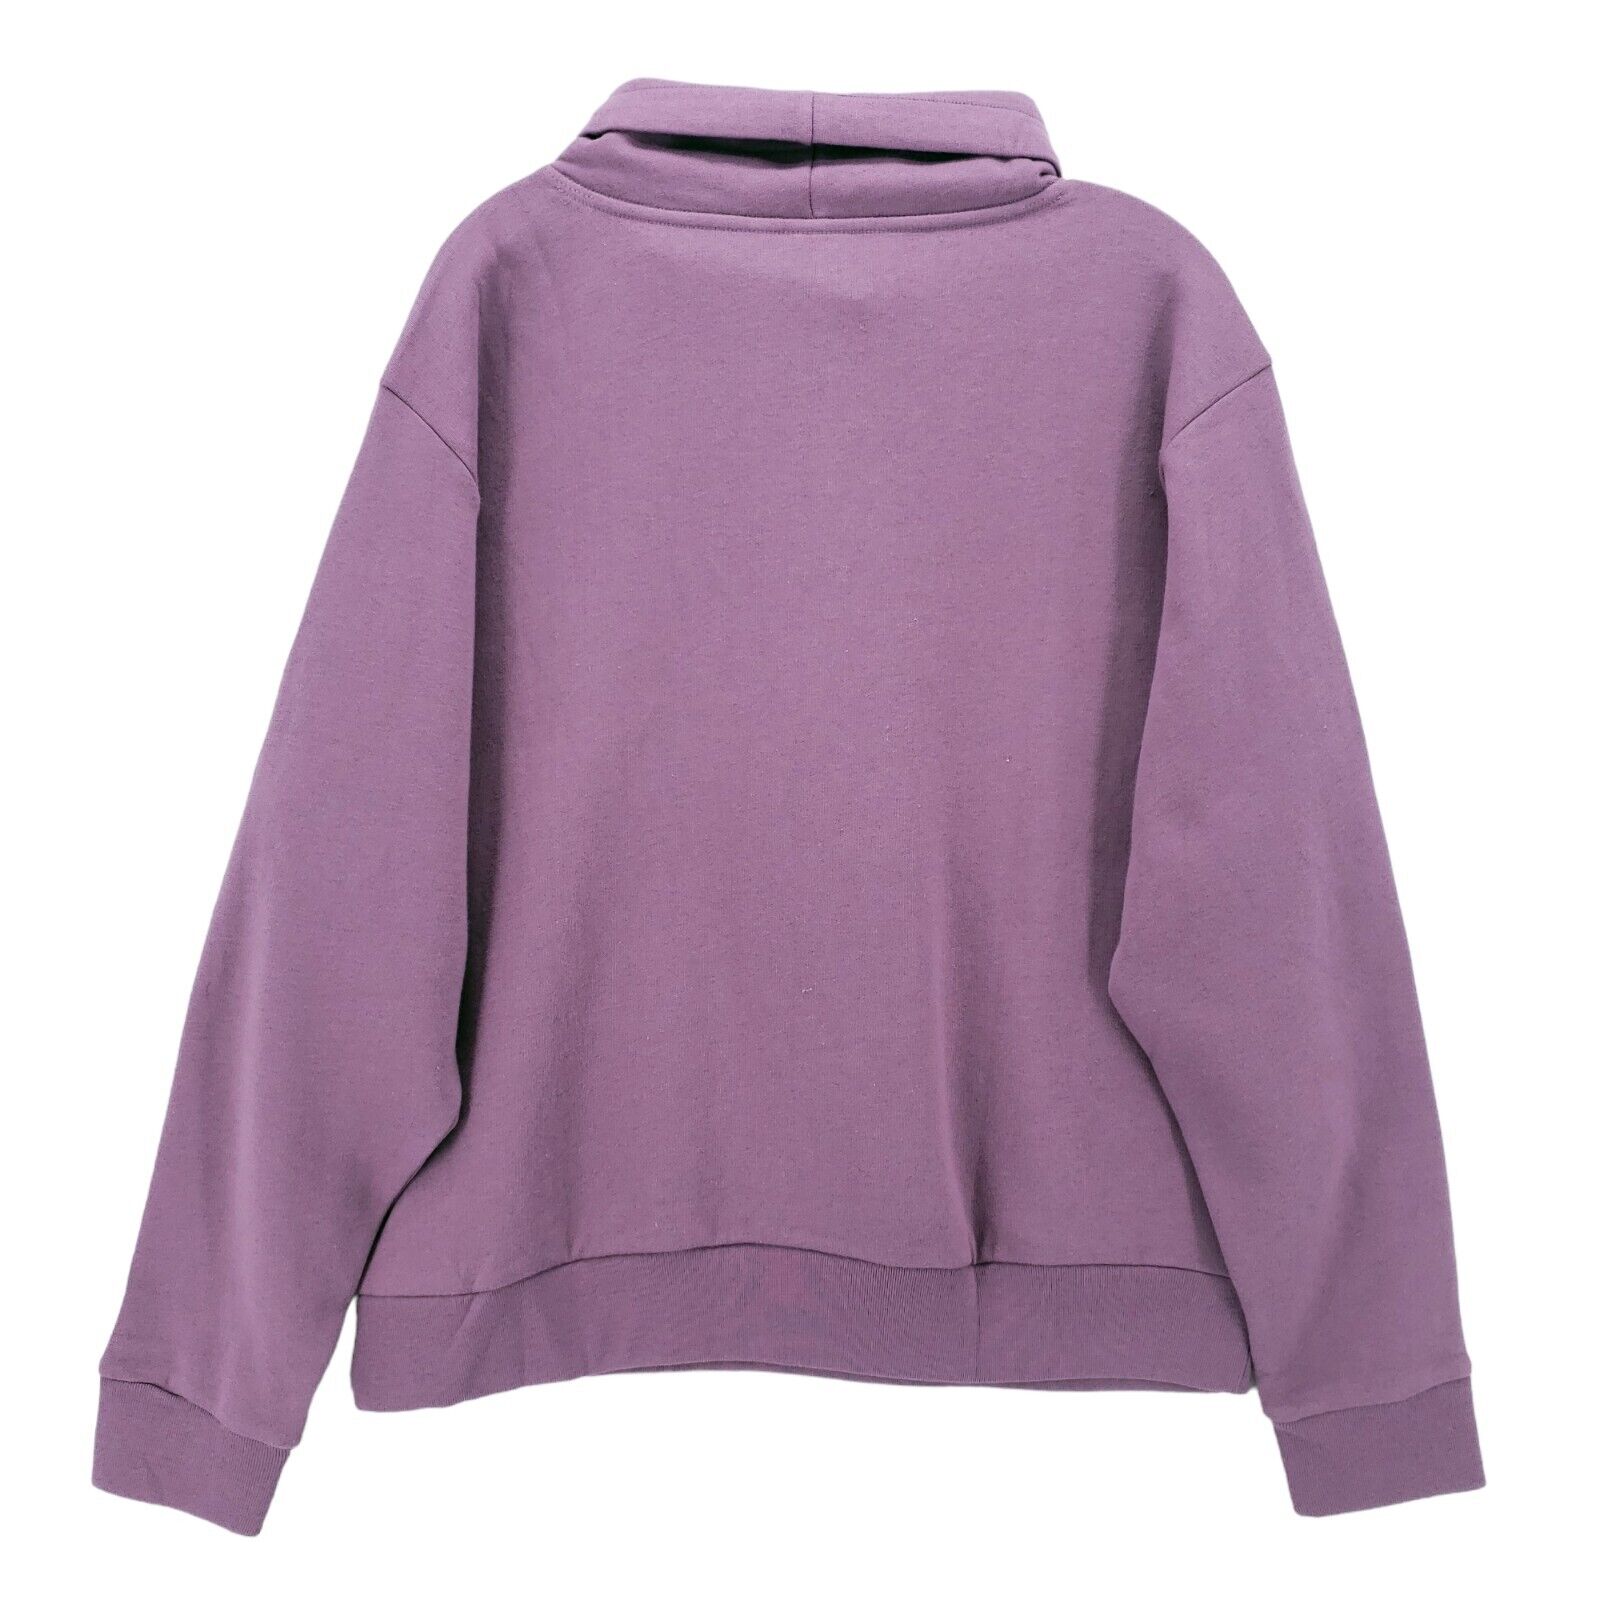 NWT Victoria's Secret Pink Pullover Sweatshirt High Cowl Neck Graphic Top